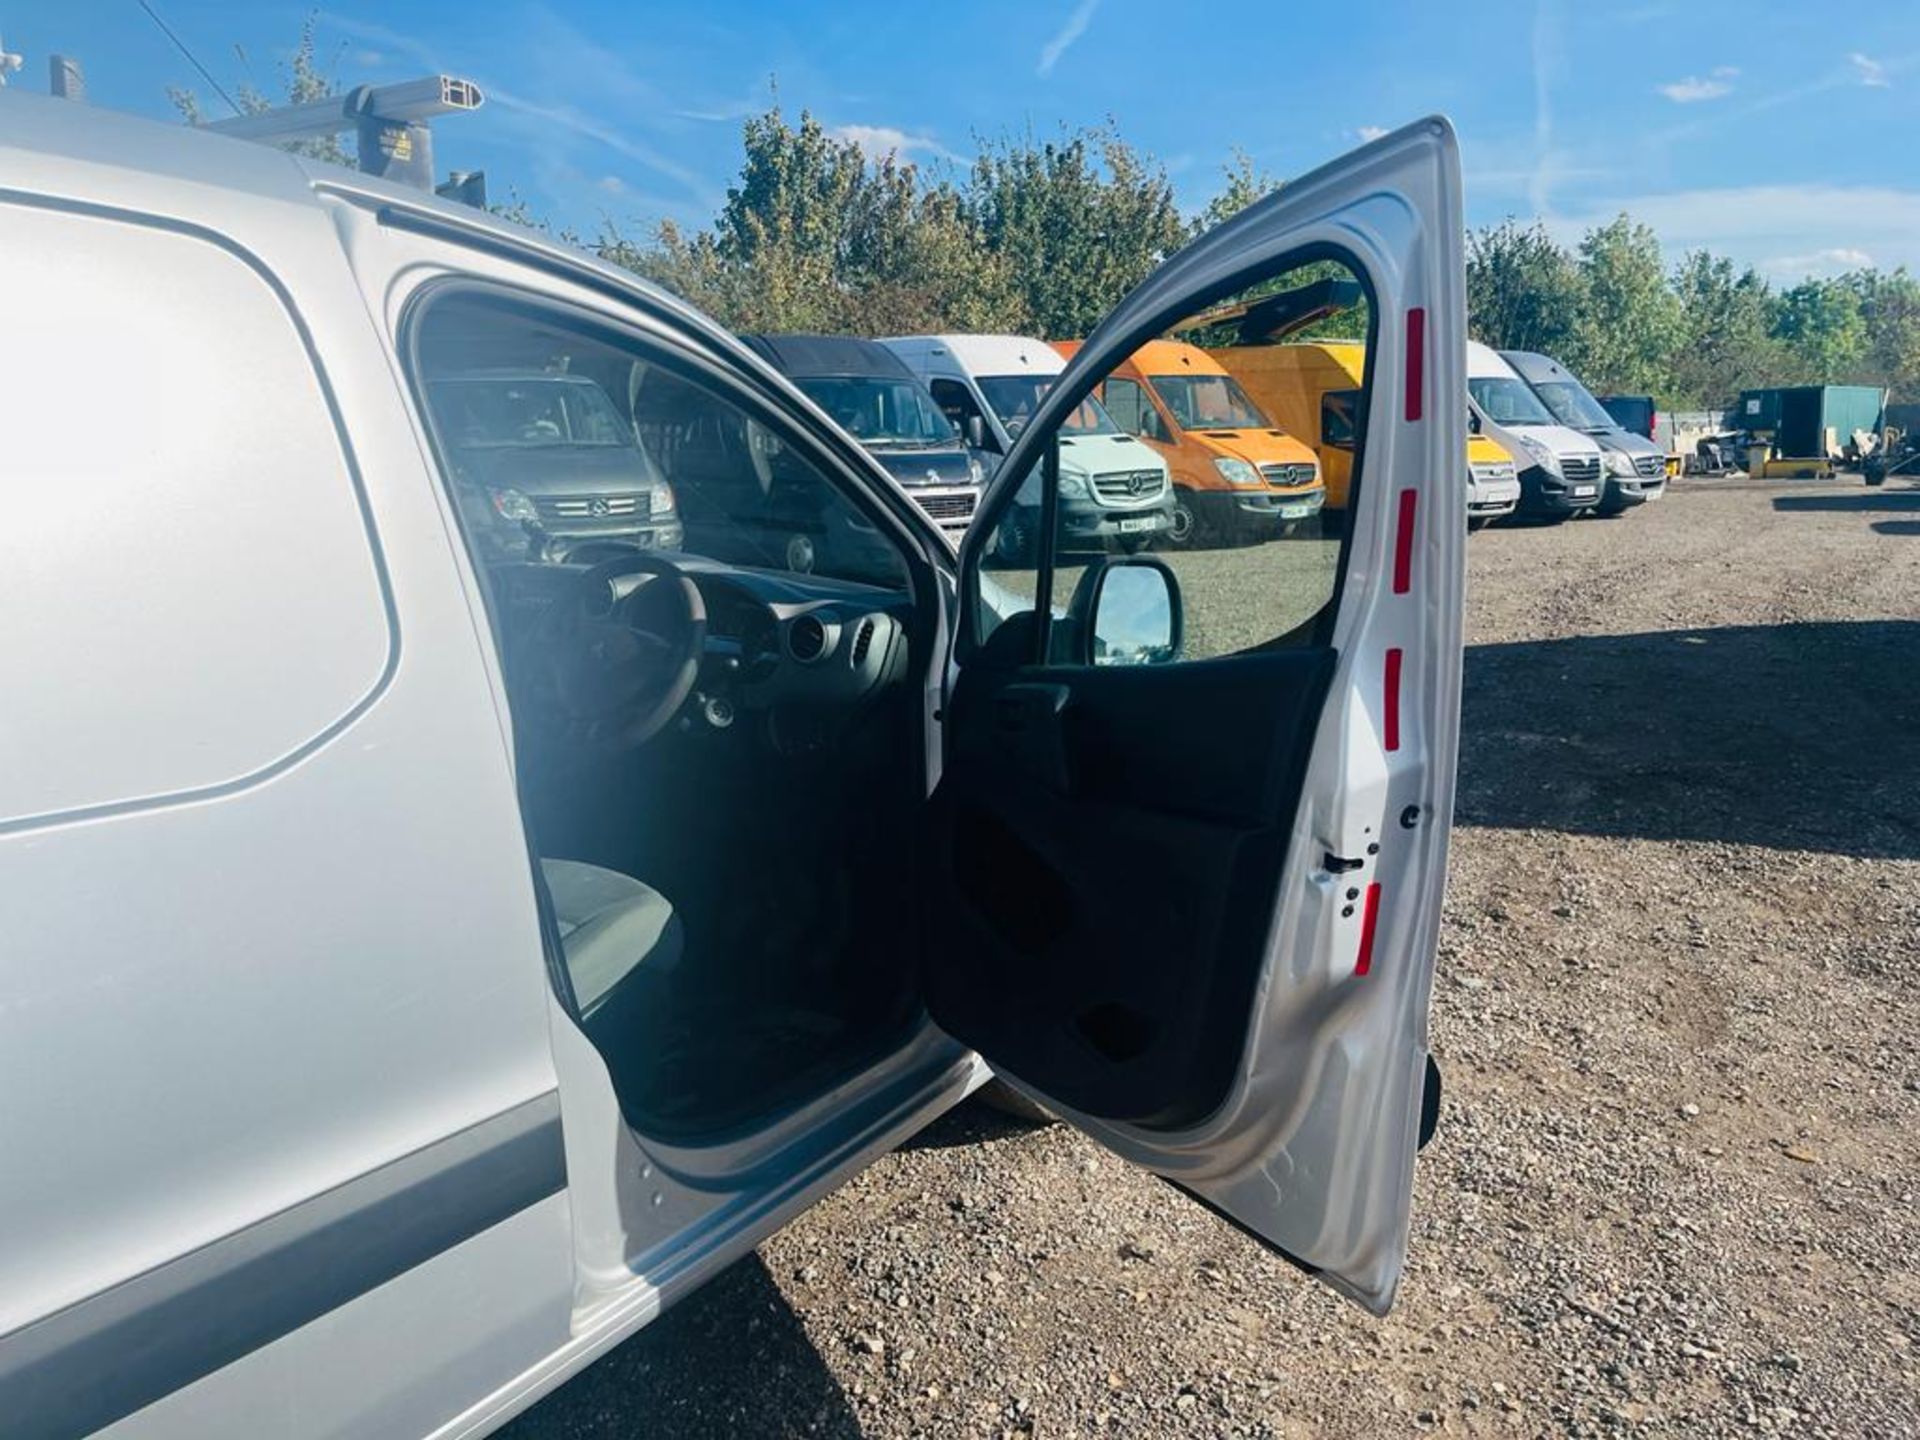 ** ON SALE ** Peugeot Partner L1 1.6 HDI 92 850 Professional Van 2015 '15 Reg' - A/C - Roof Rack - Image 15 of 27